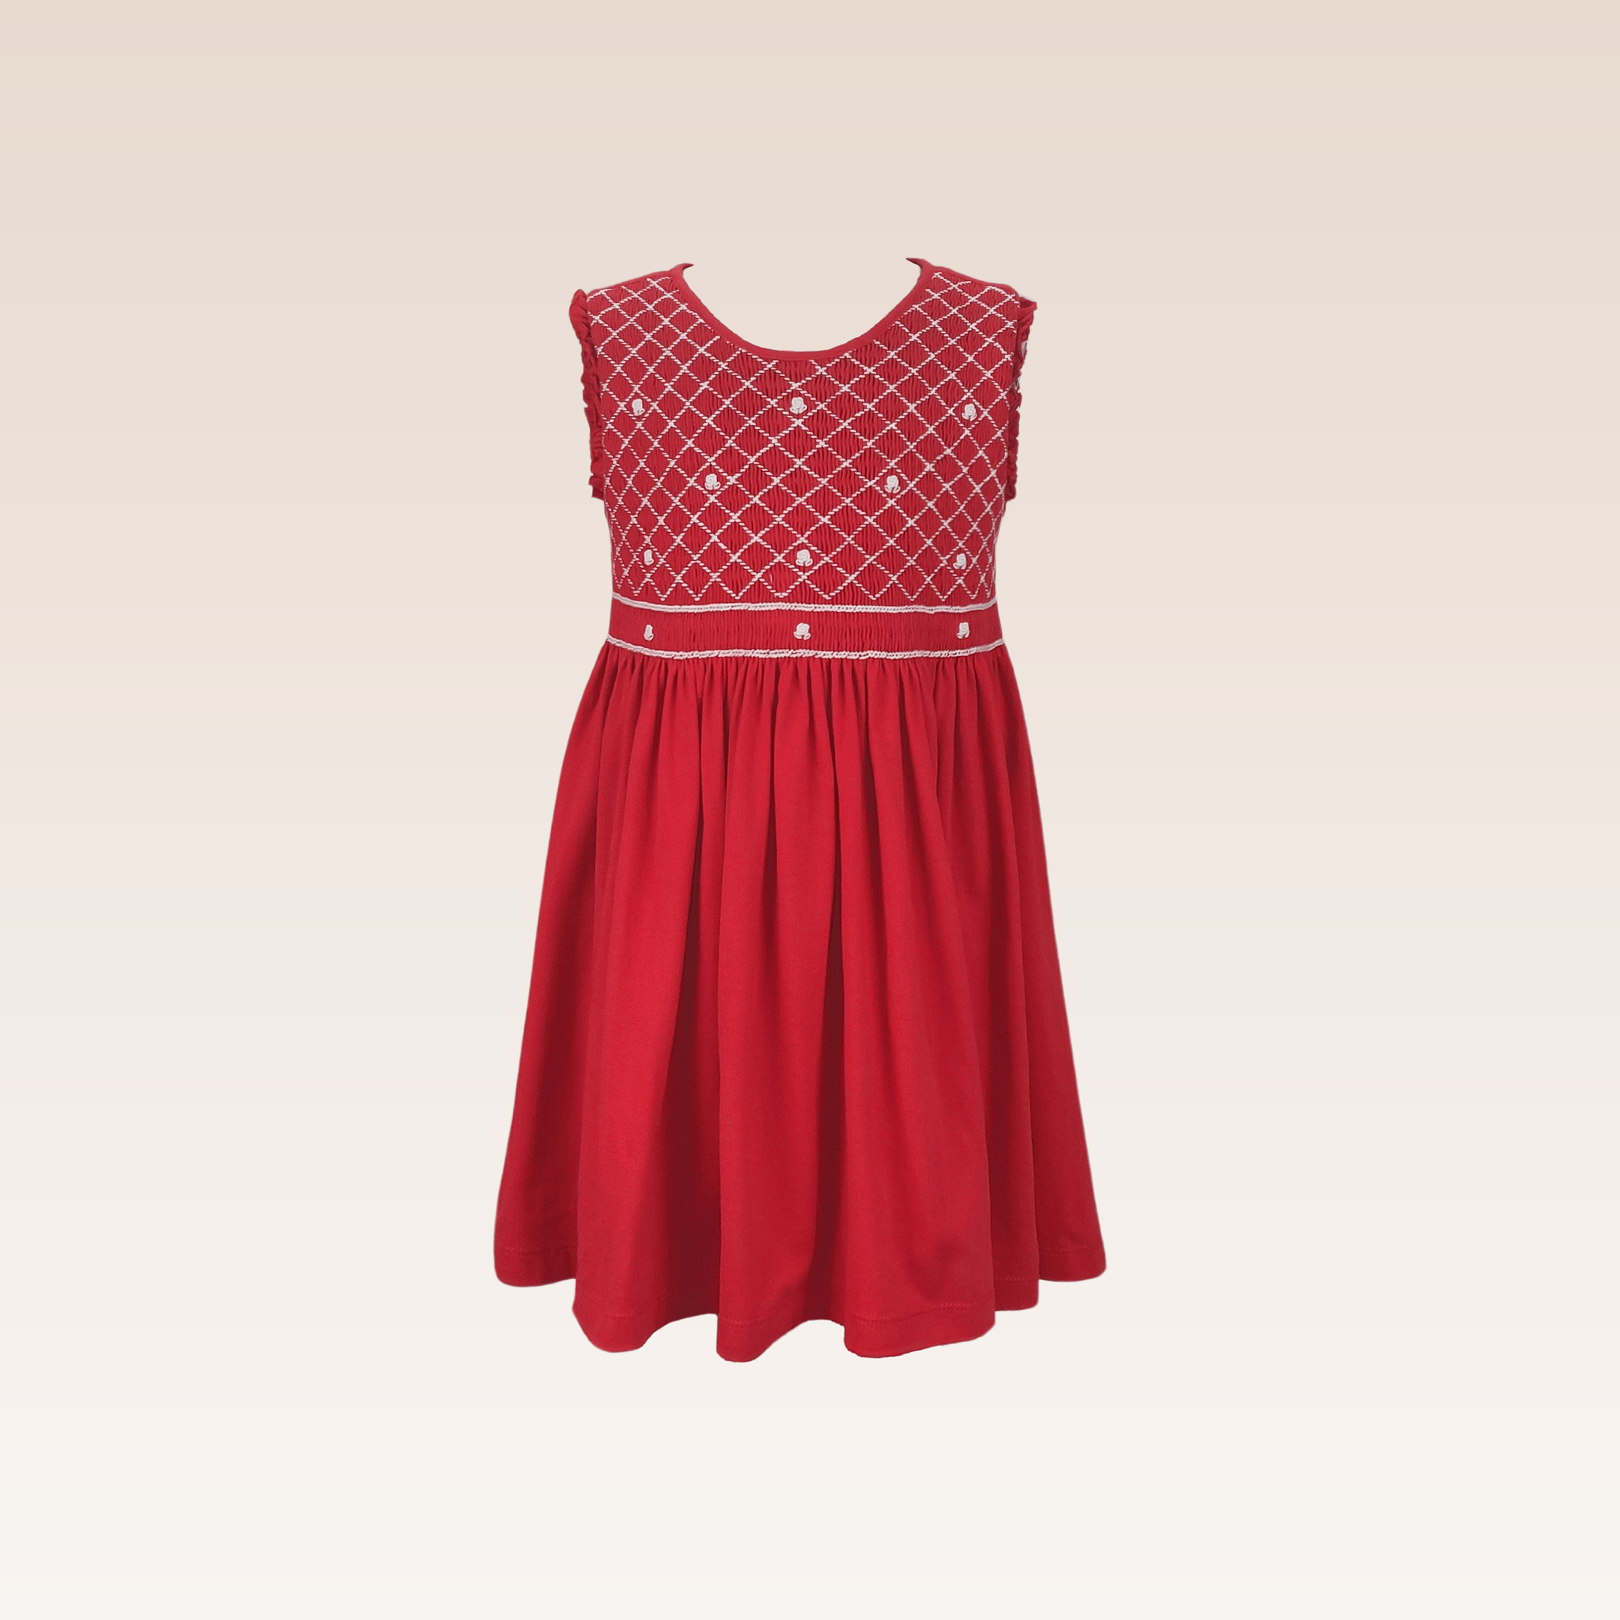 Amanda Girls Red Sleeveless Ruffled Dress Full Smocked and Embroidery